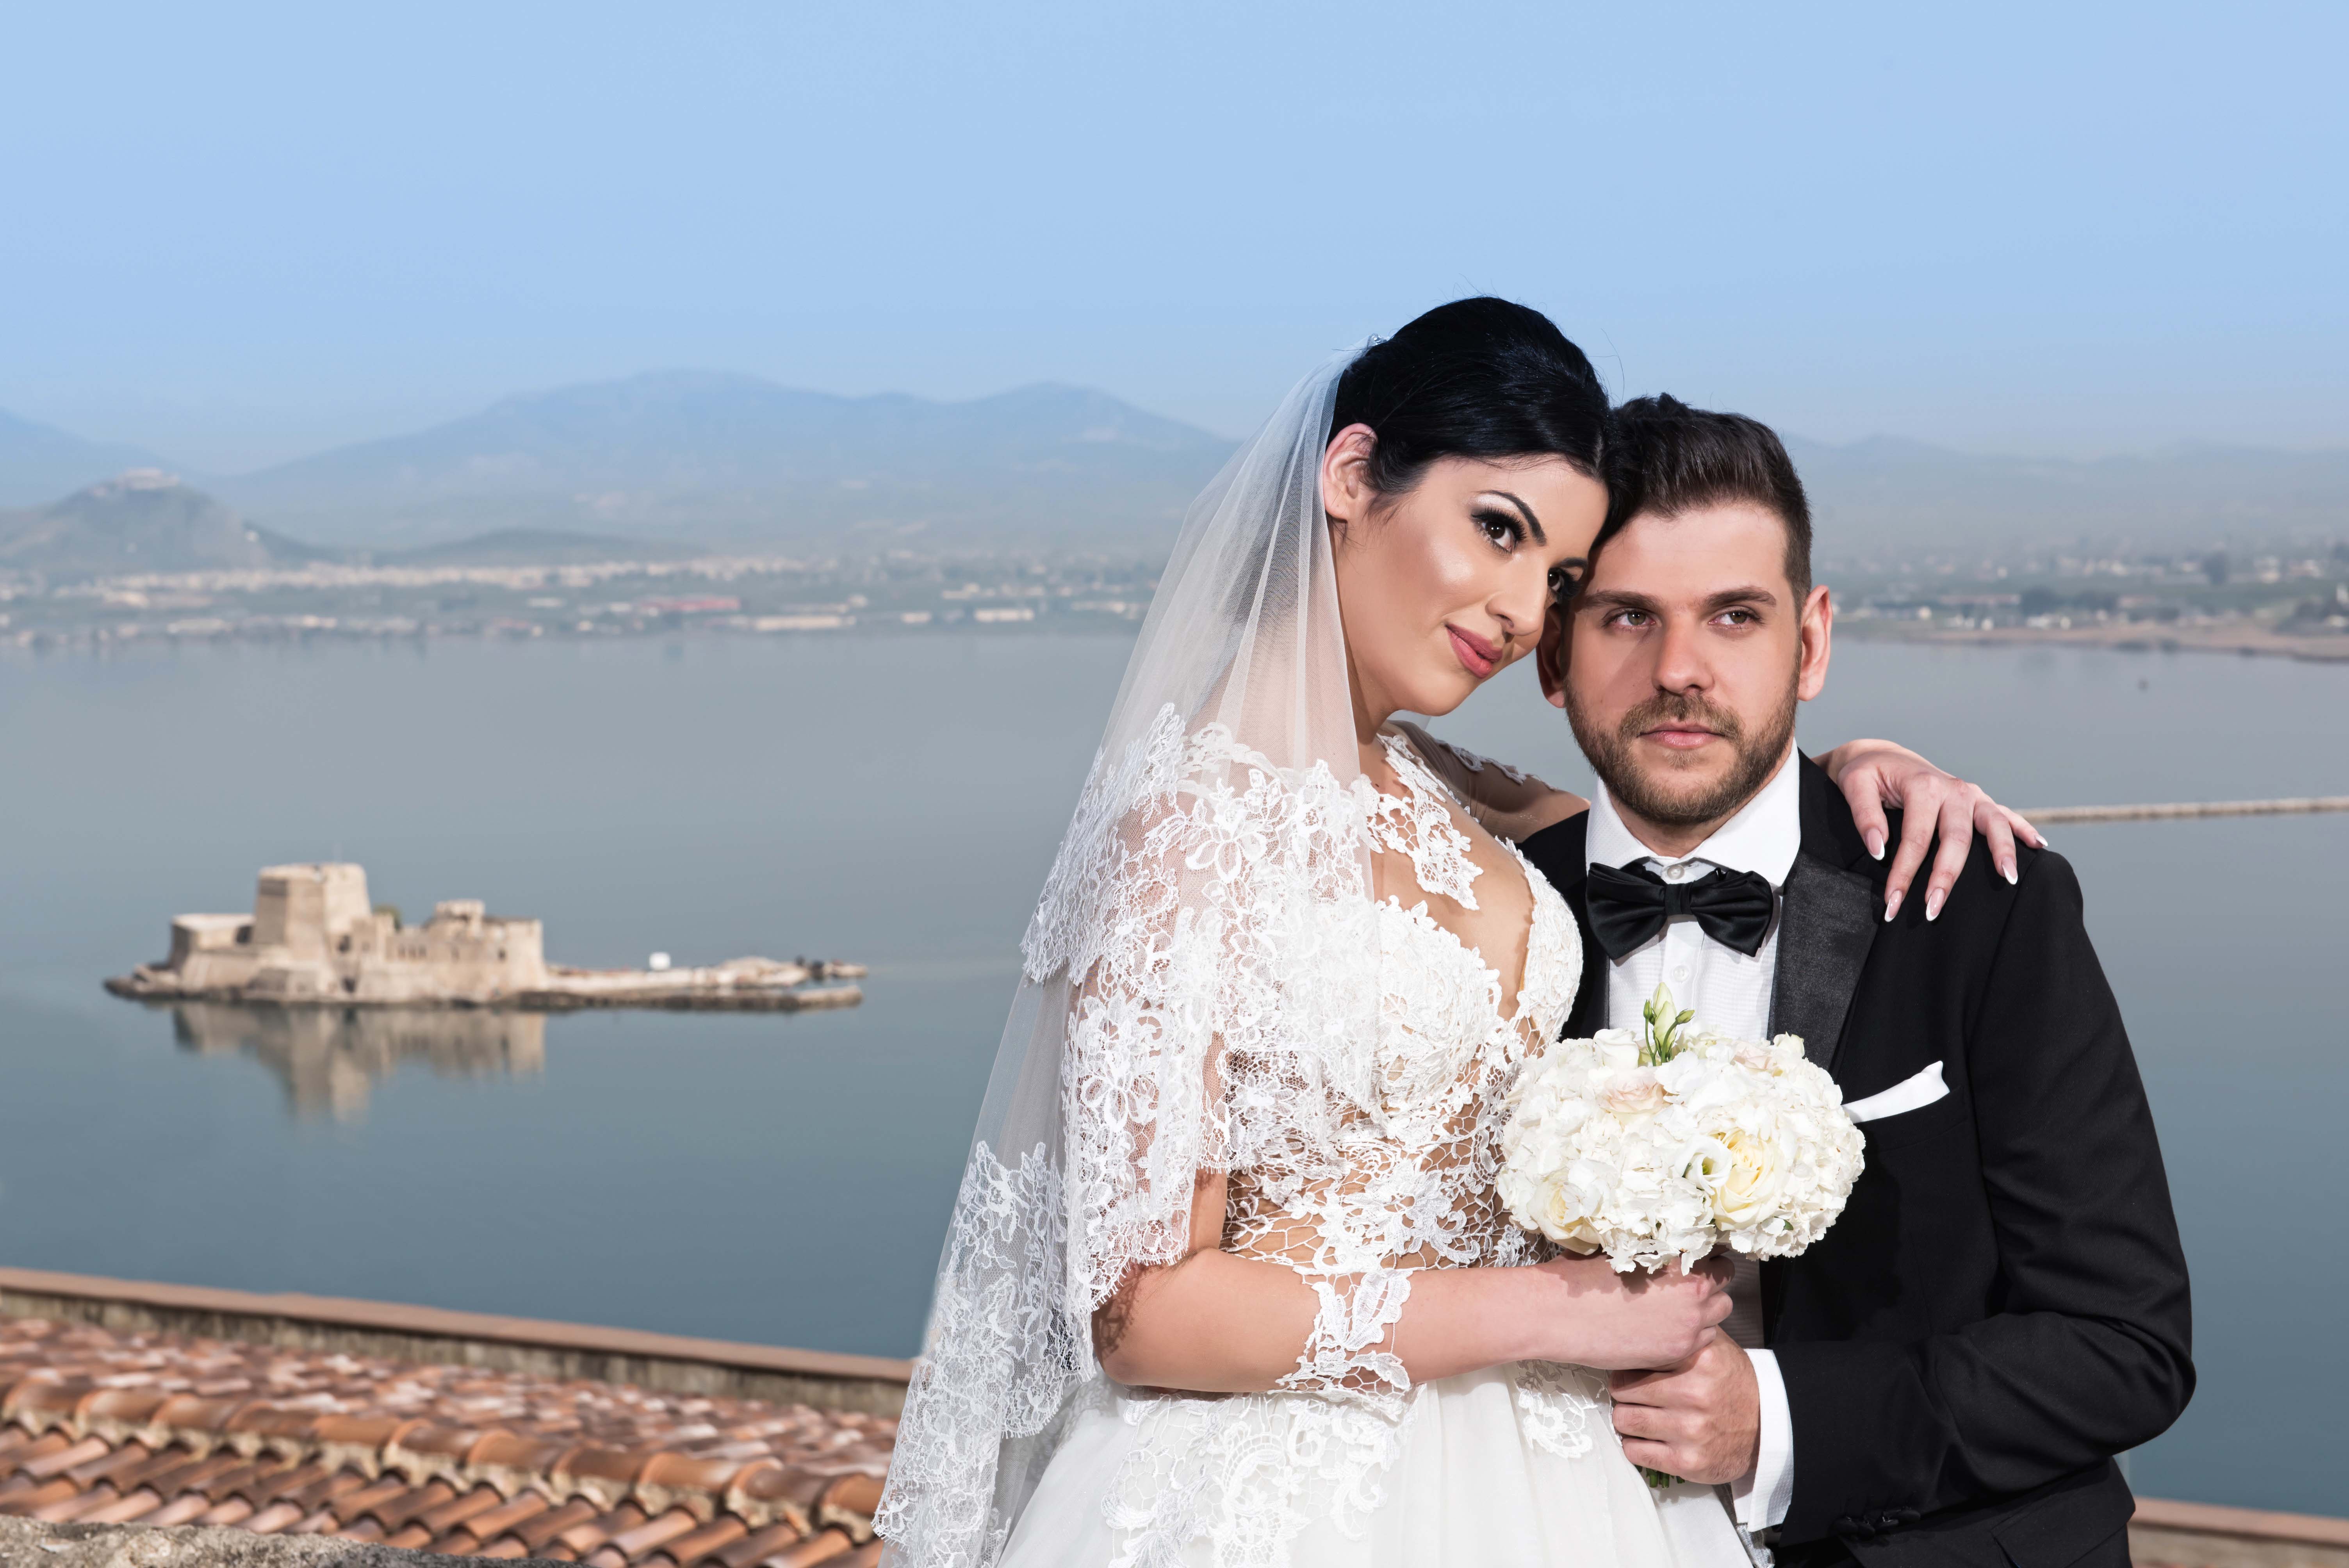 Wedding Nafplio - Litsa Vasiliou Angela Papageorgopoulou, Wedding plan